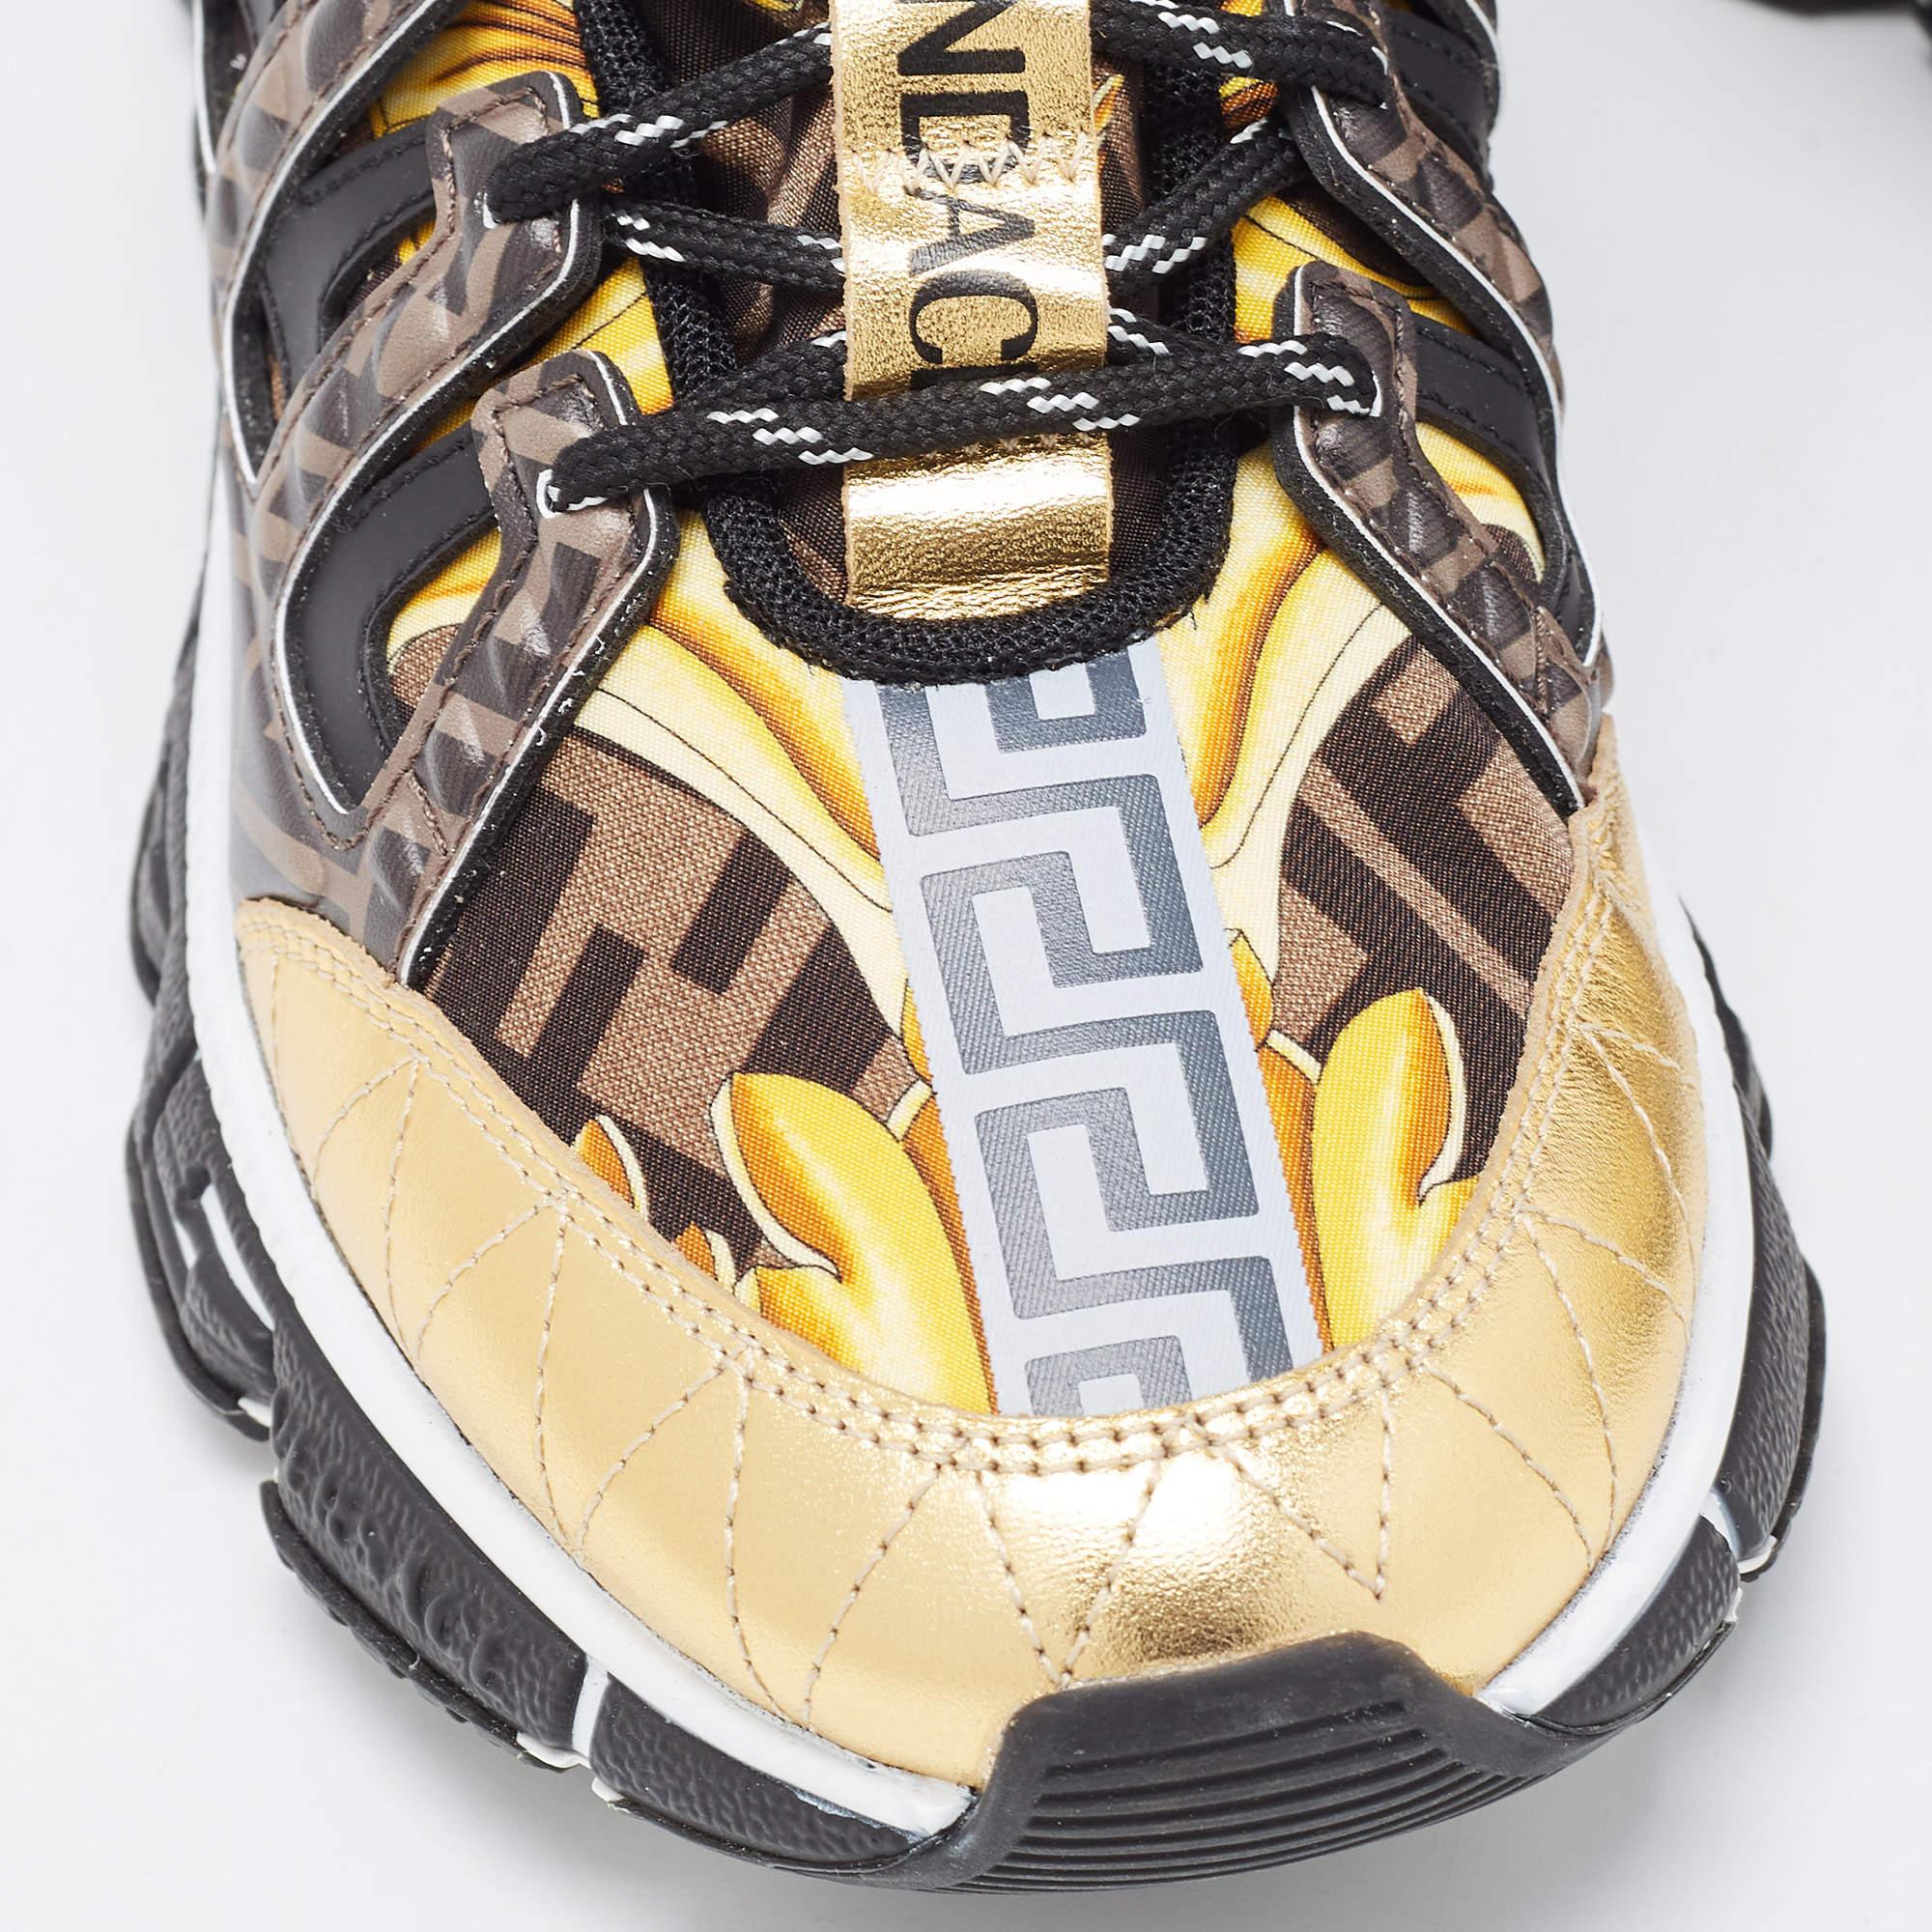 Versace x Fendi Fendace Multicolor Leather and Canvas Trigreca Sneakers Size 41 1